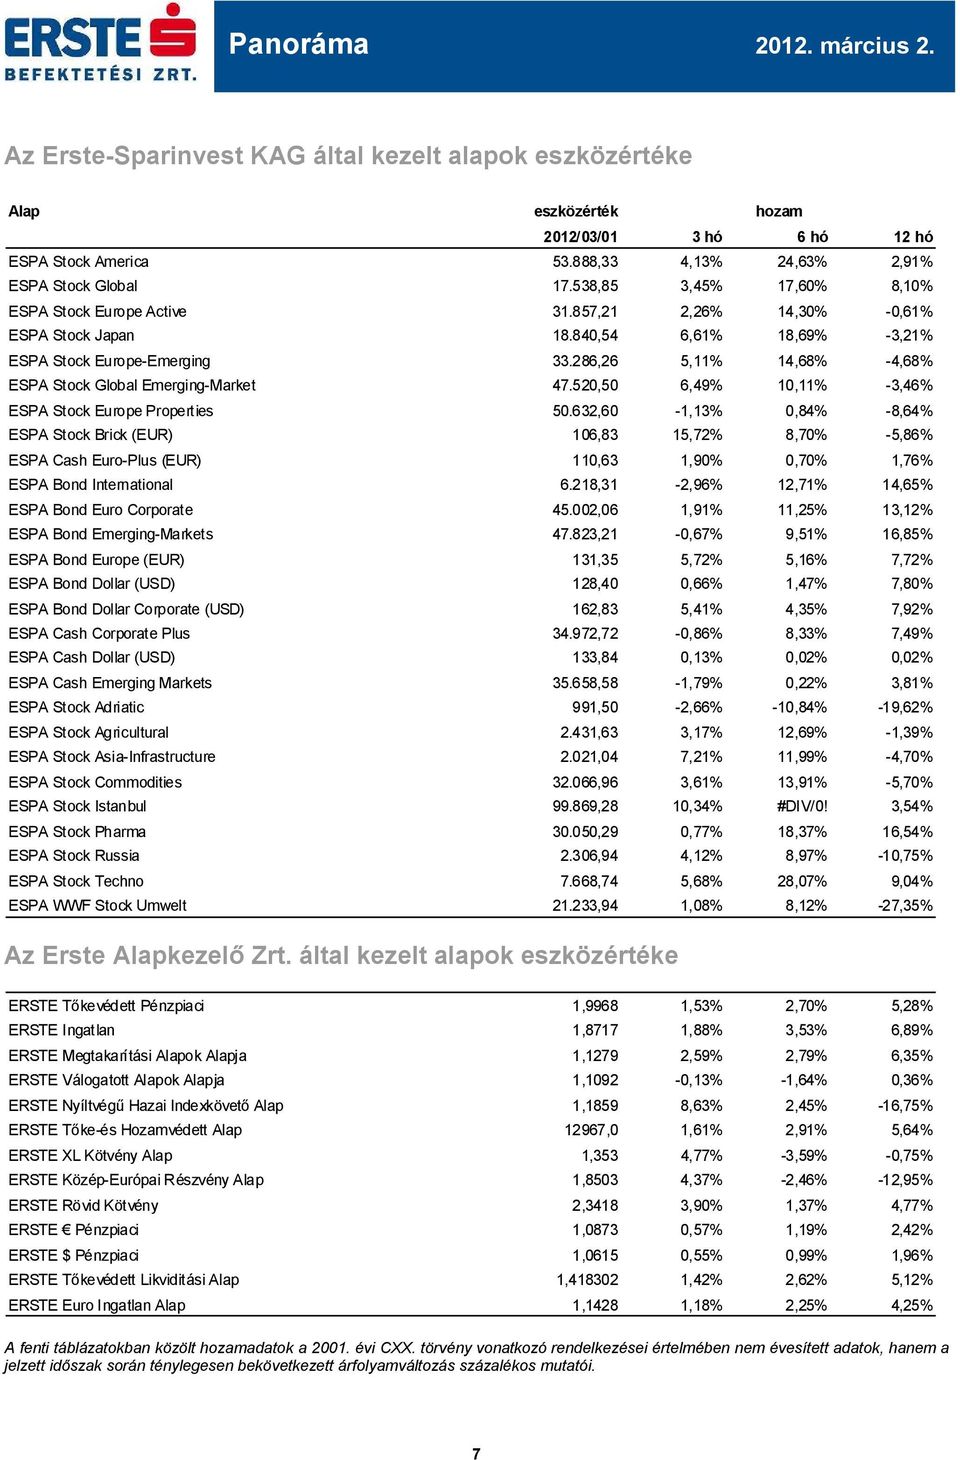 286,26 5,11% 14,68% -4,68% ESPA Stock Global Emerging-Market 47.520,50 6,49% 10,11% -3,46% ESPA Stock Europe Properties 50.